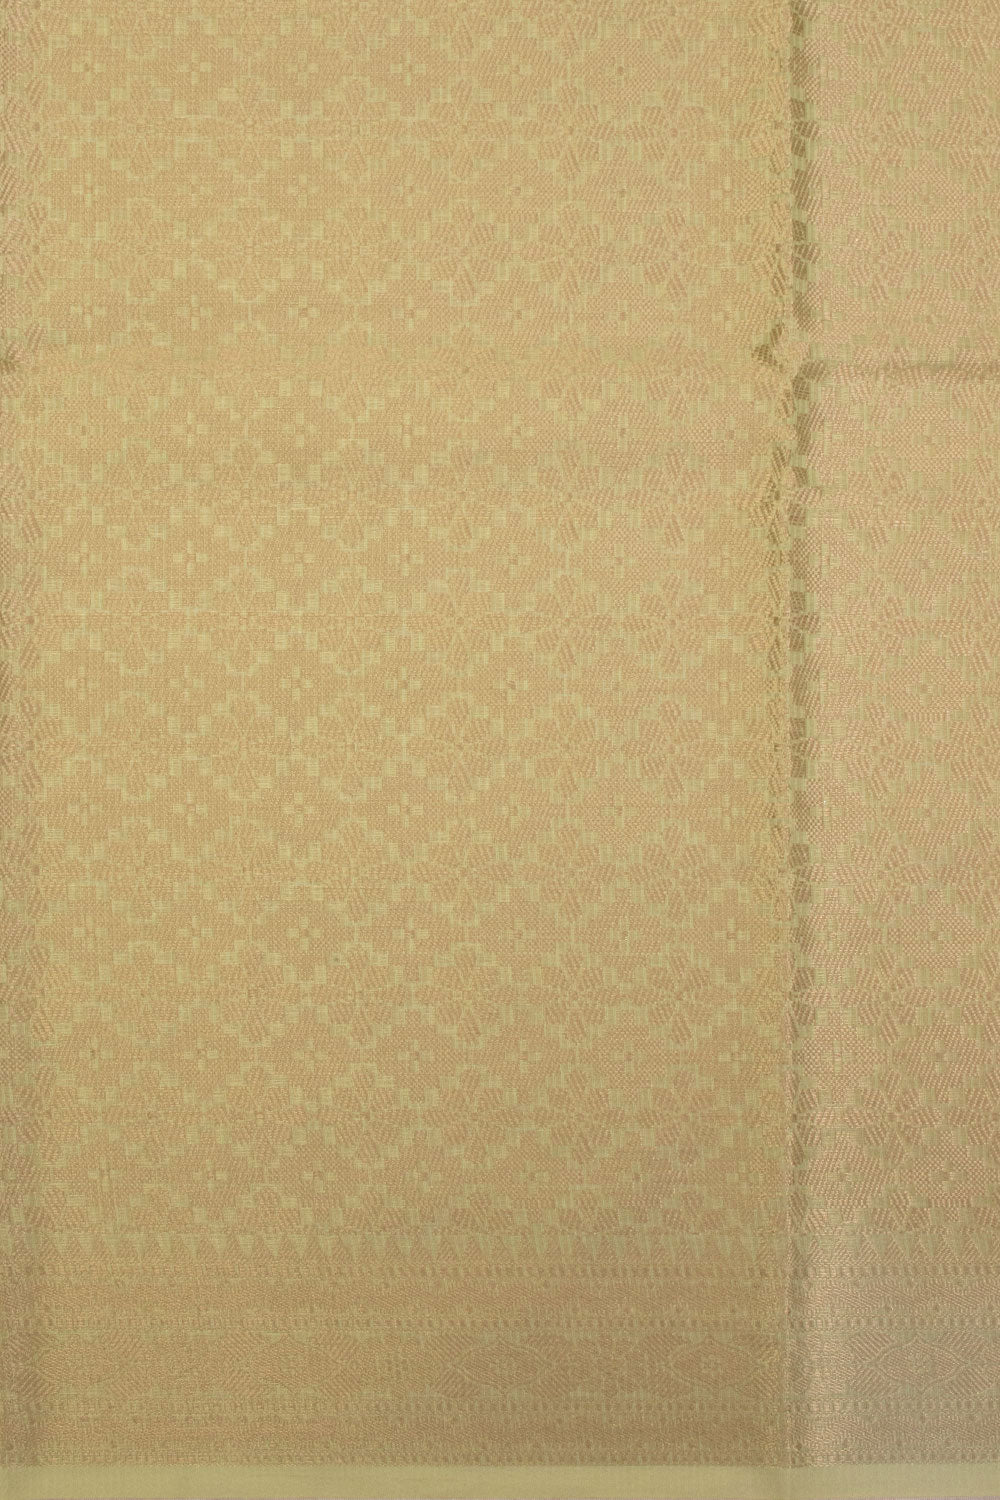 Mint Green Handloom Banarasi Silk Cotton Saree 10070491